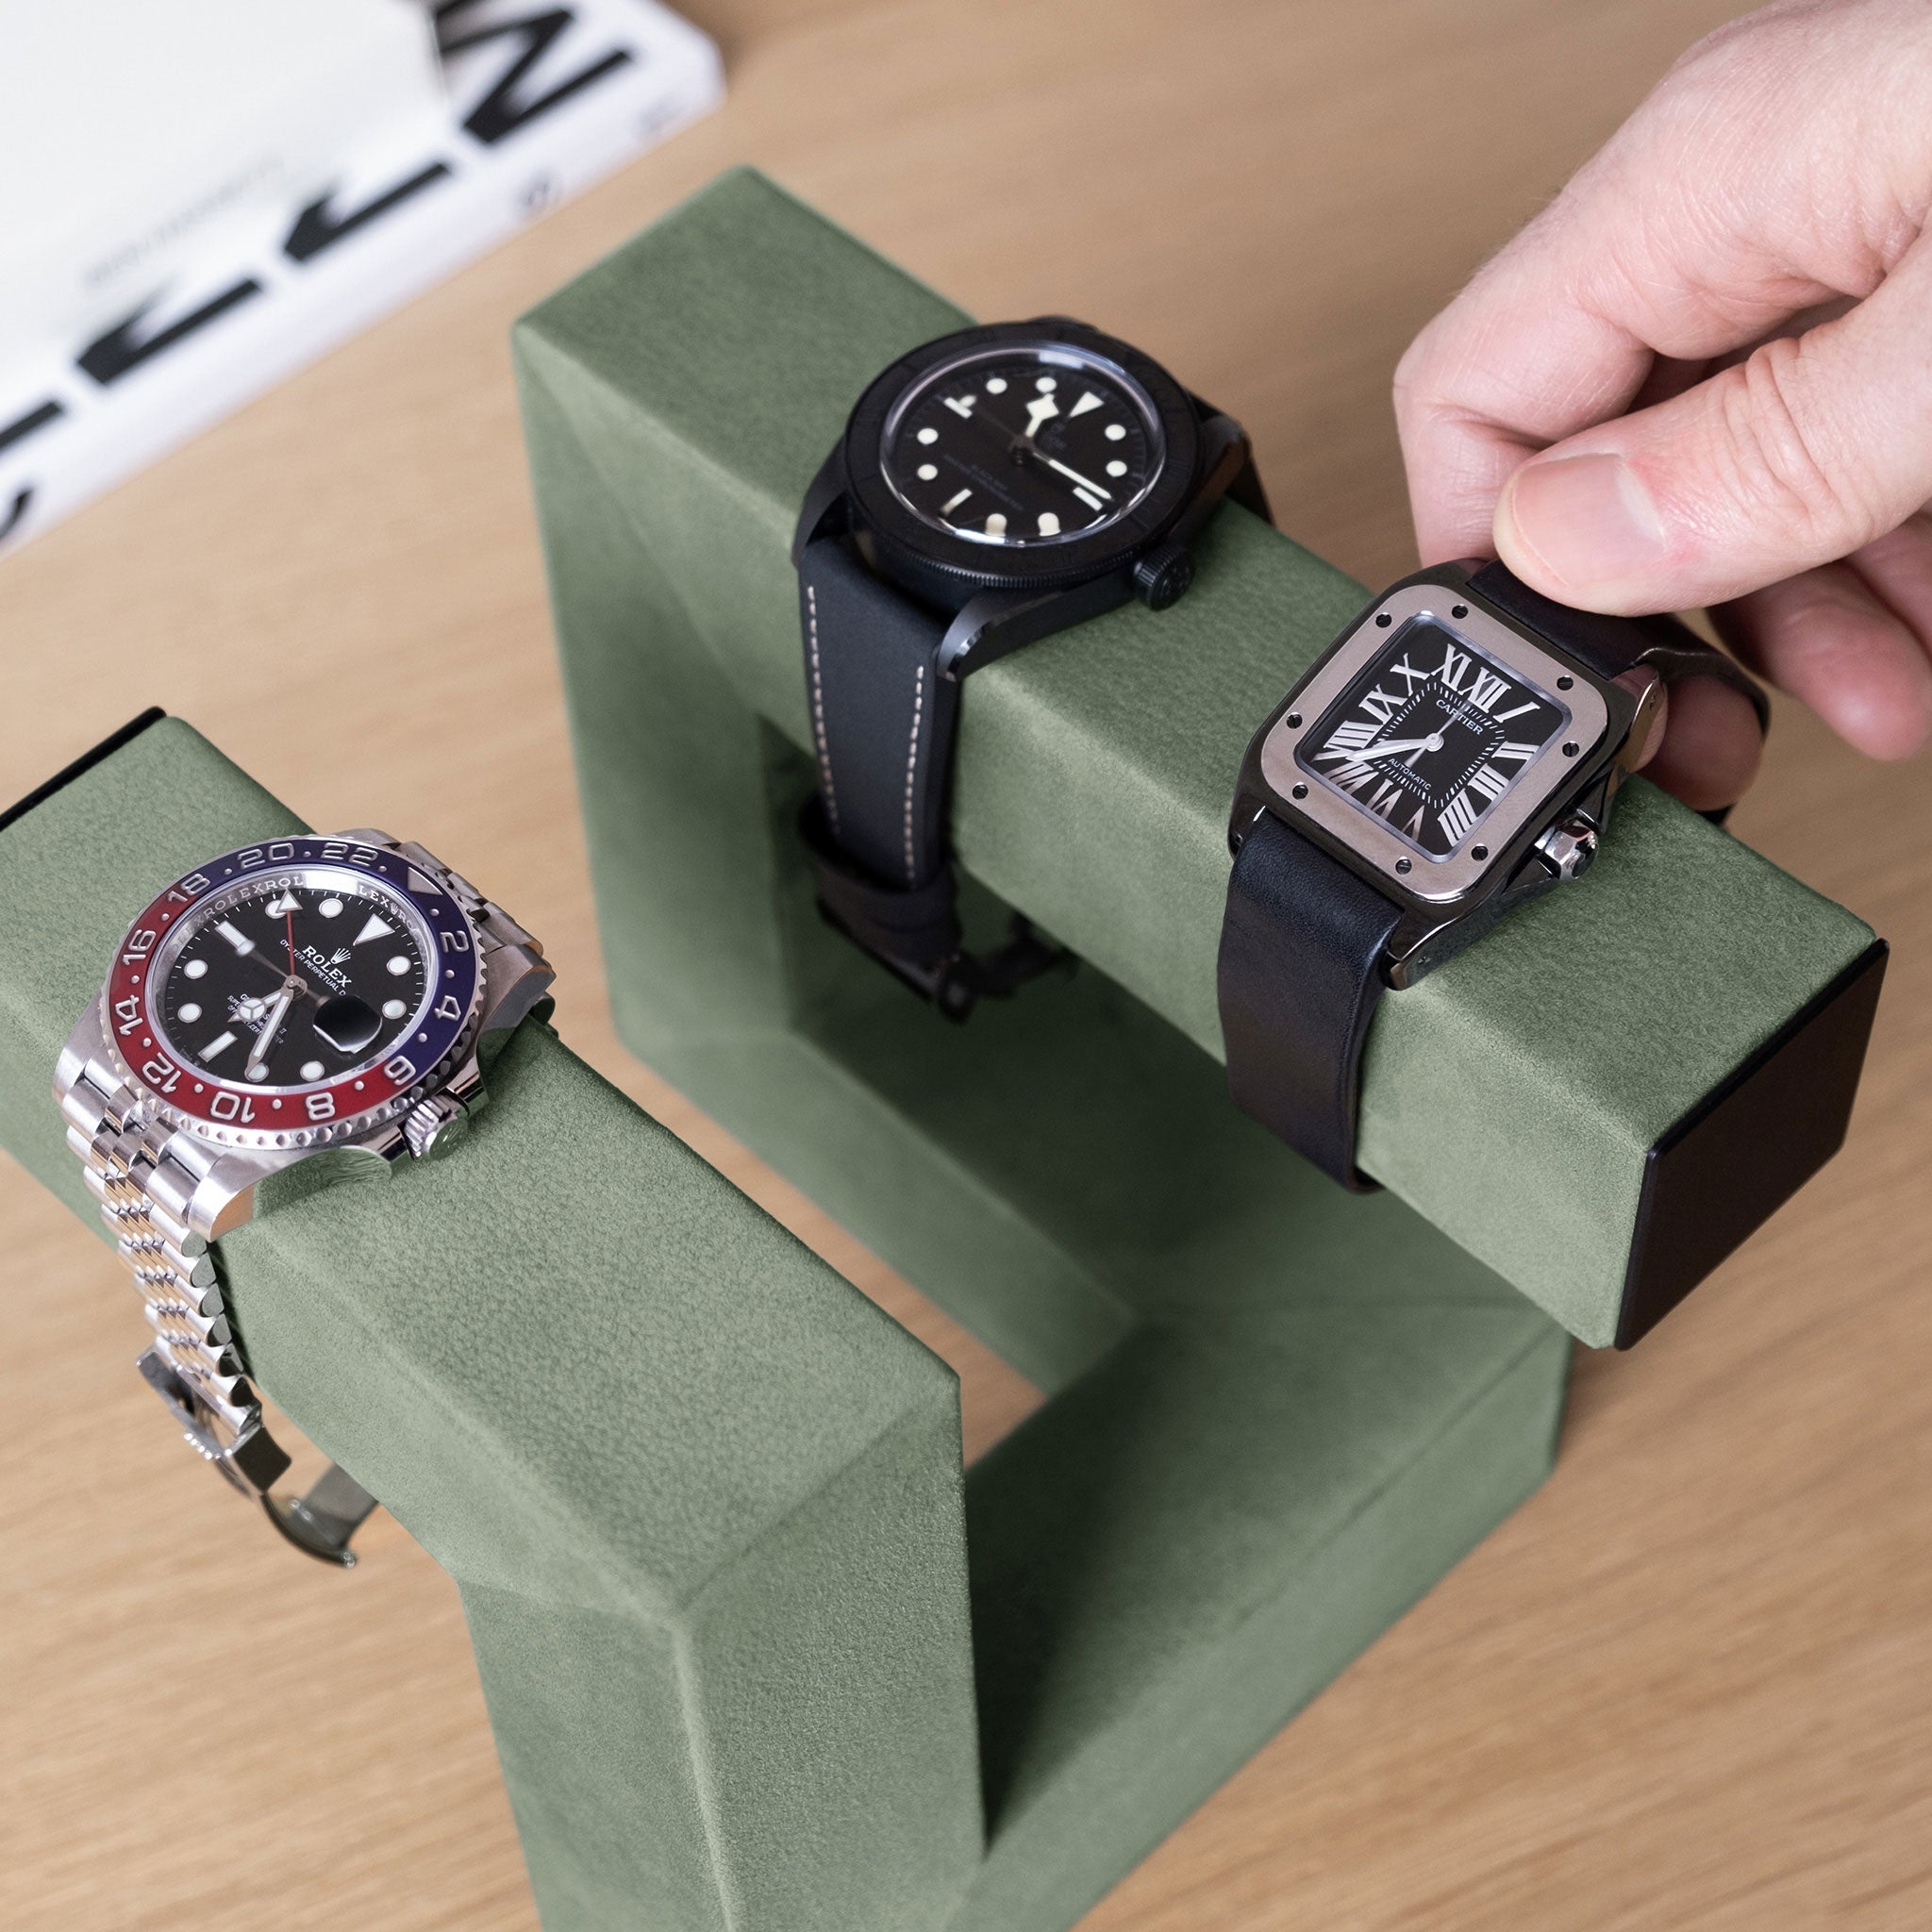 Lifestyle photo of minimalist watch stand holding 3 luxury watches